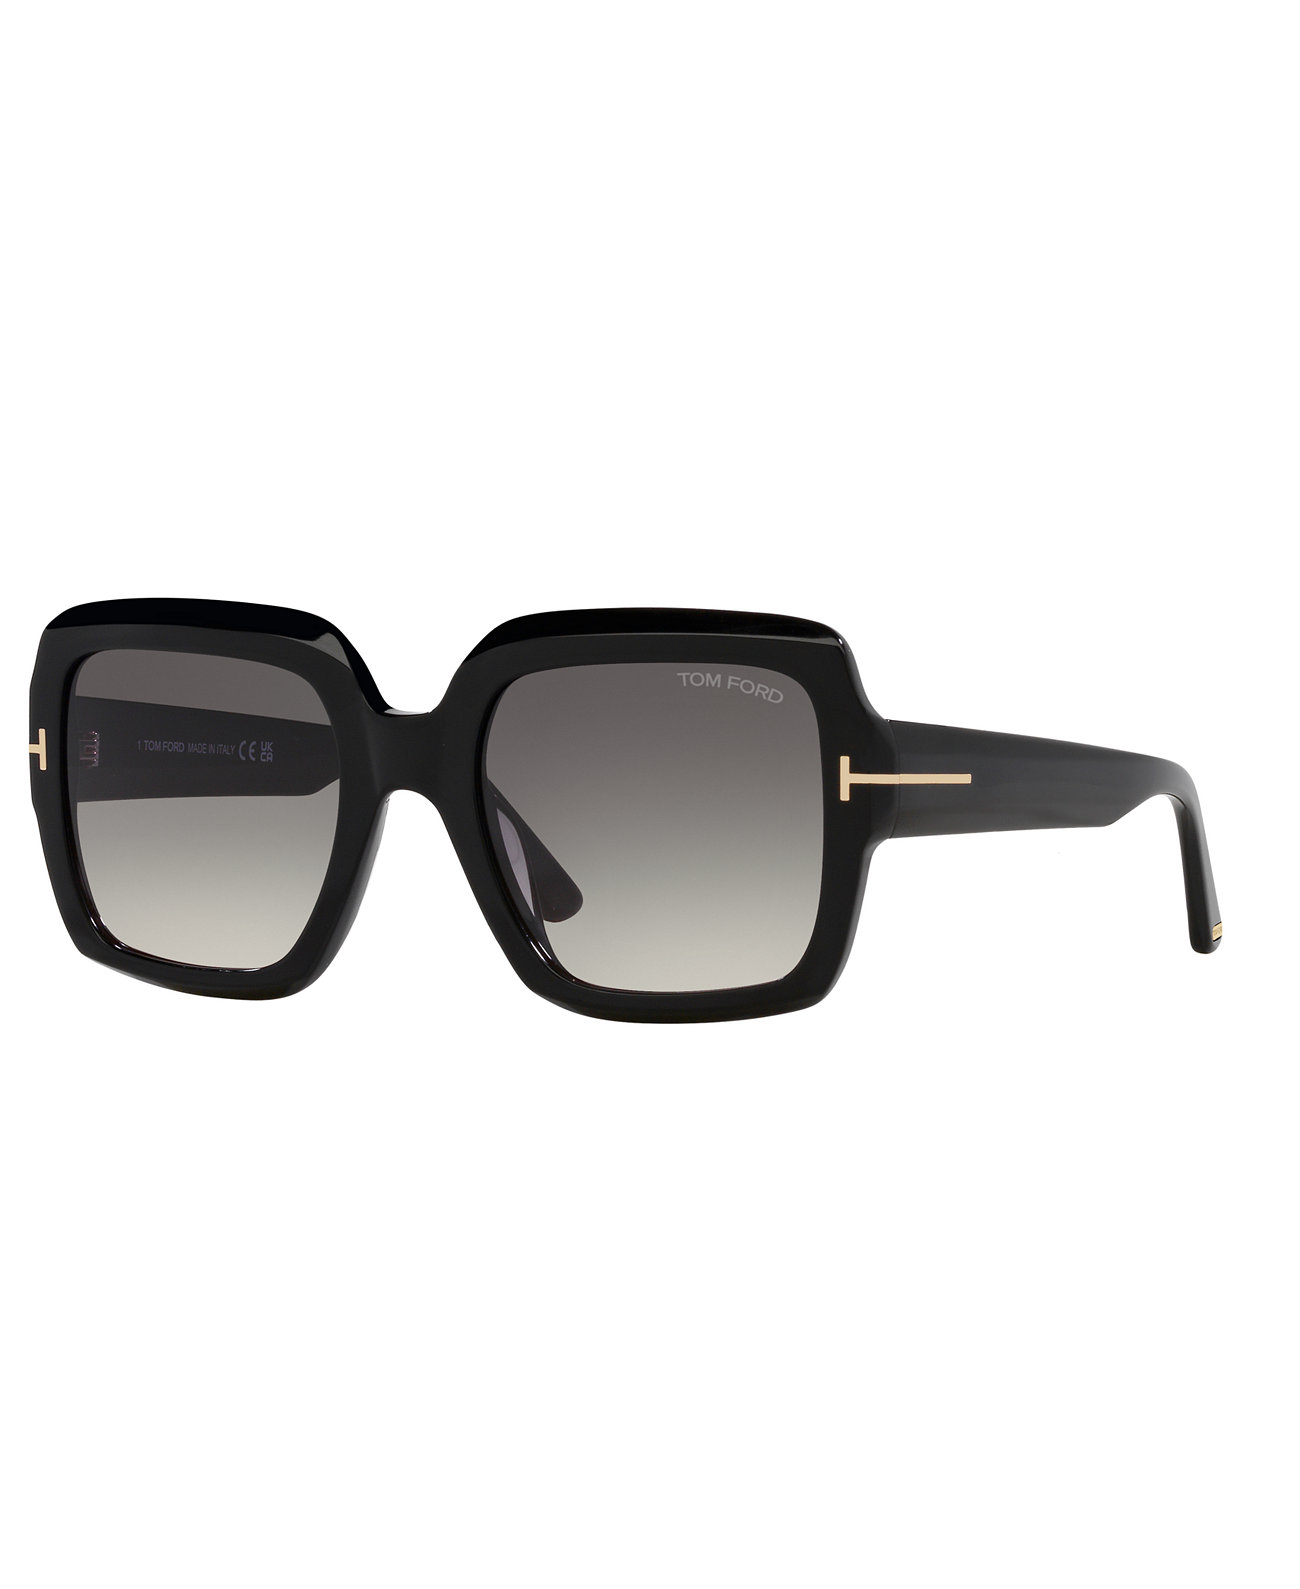 Women's Sunglasses, Kaya Tom Ford